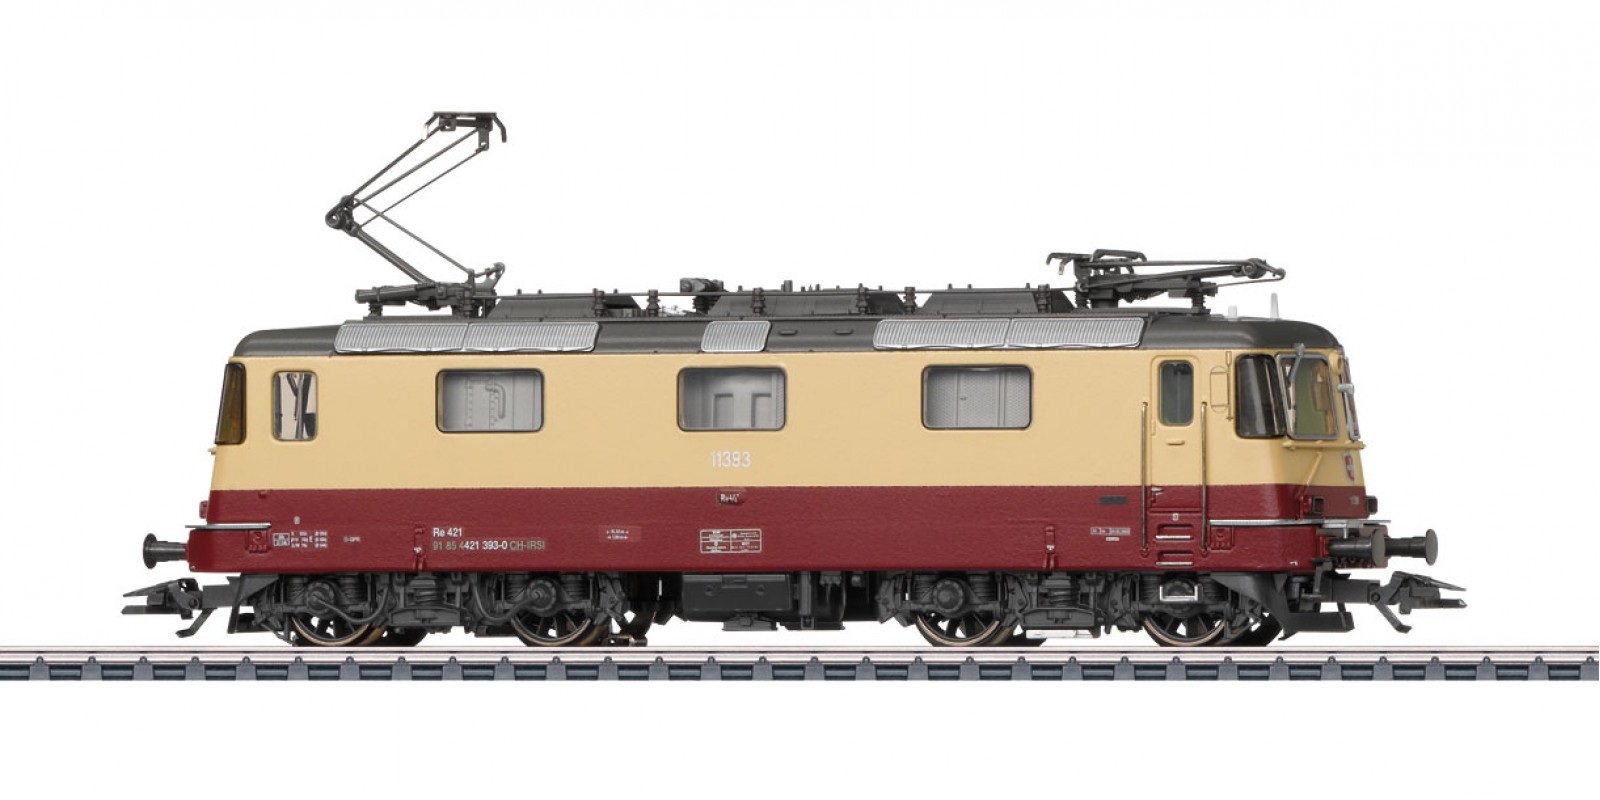 037300_01 Class Re 421 ΤΕΕ Electric Locomotive